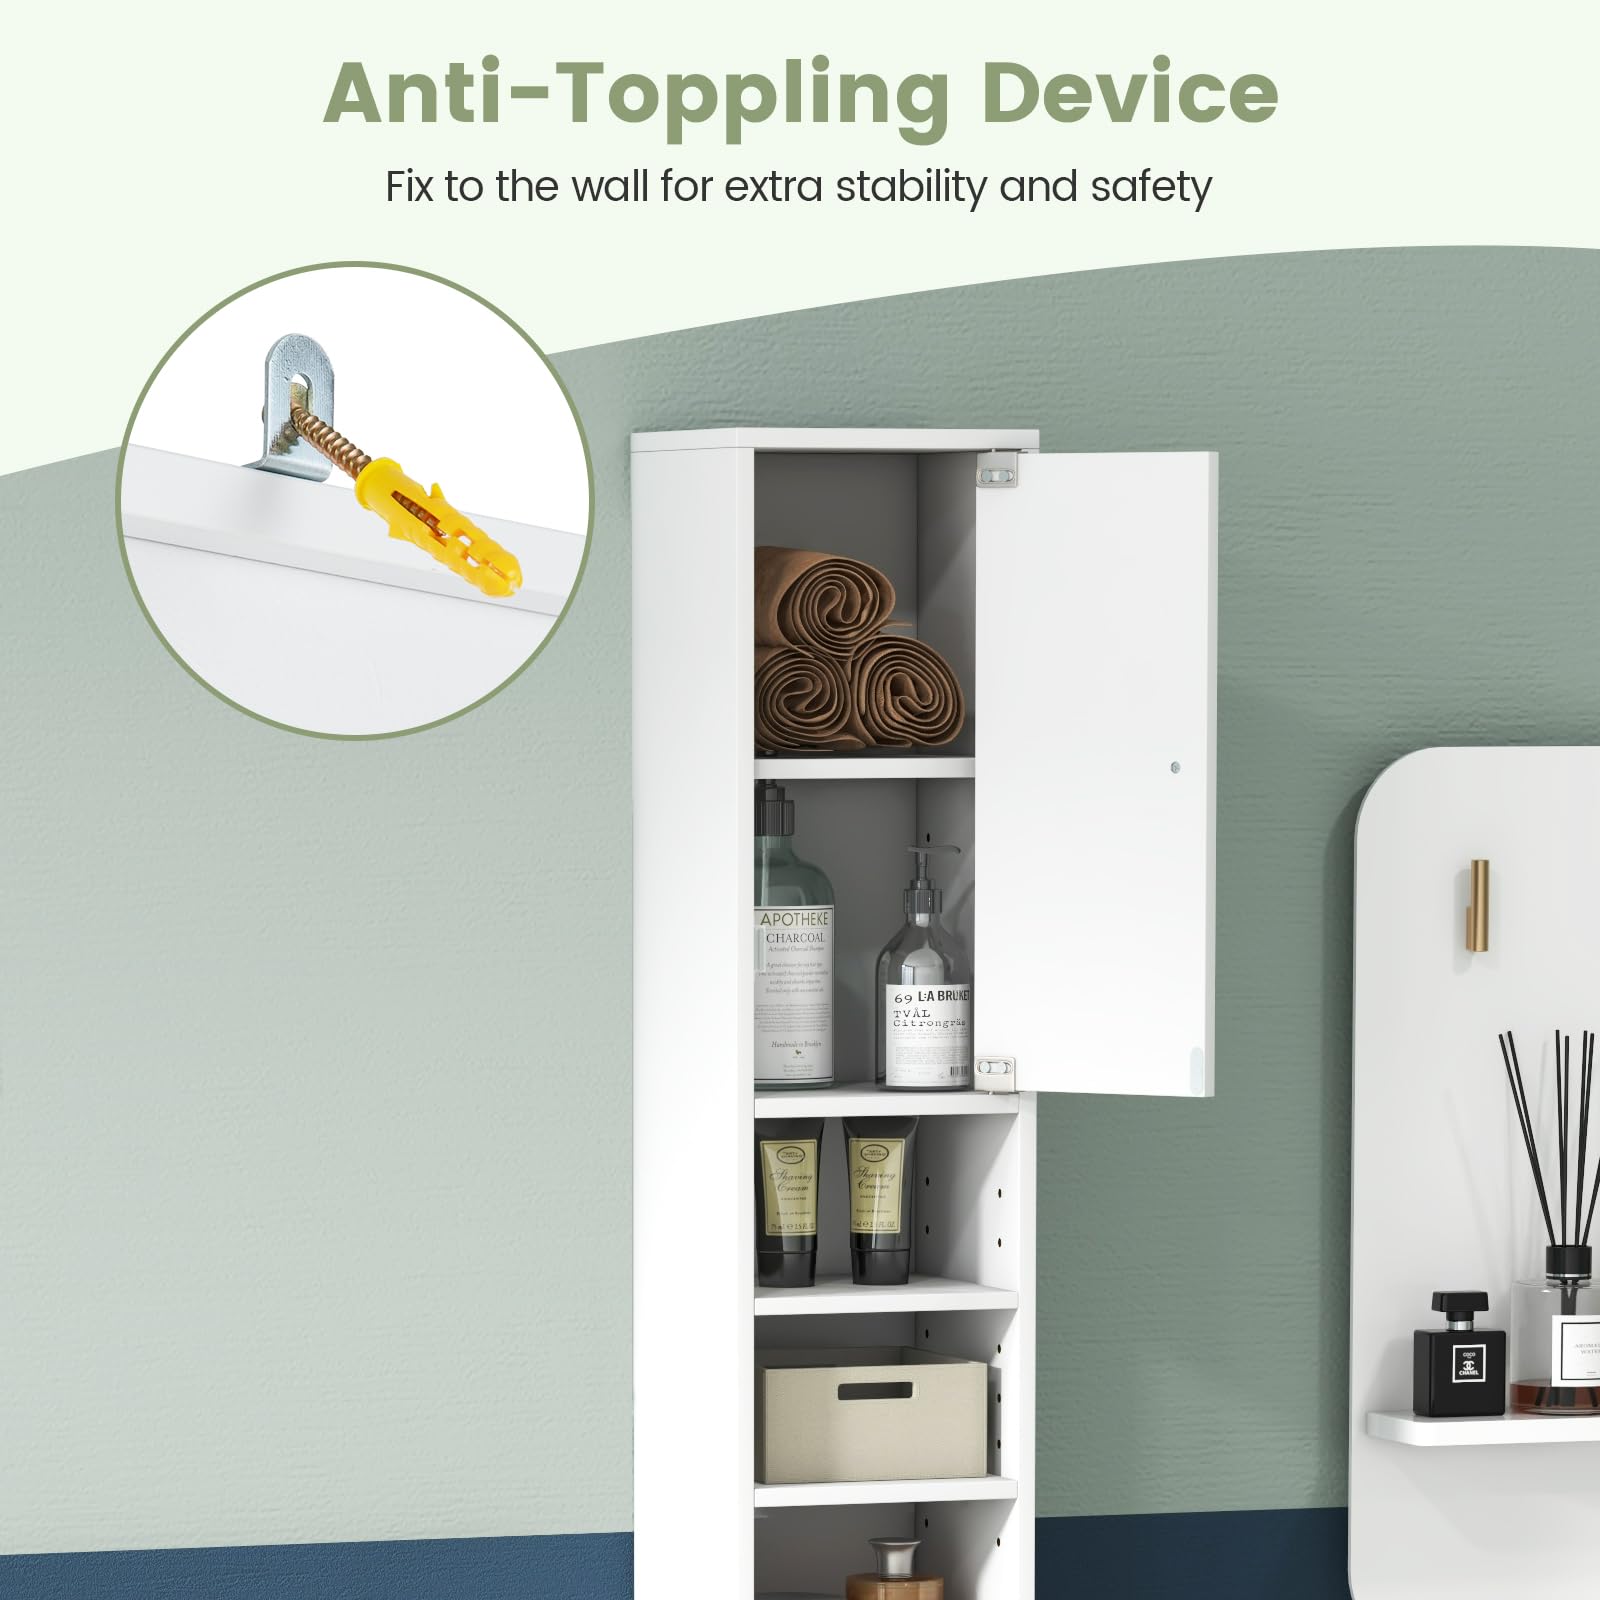 Tangkula Narrow Bathroom Storage Cabinet Freestanding Side Storage  Organizer With Adjustable Shelves Drawer And Pine Wood Legs Black/white :  Target